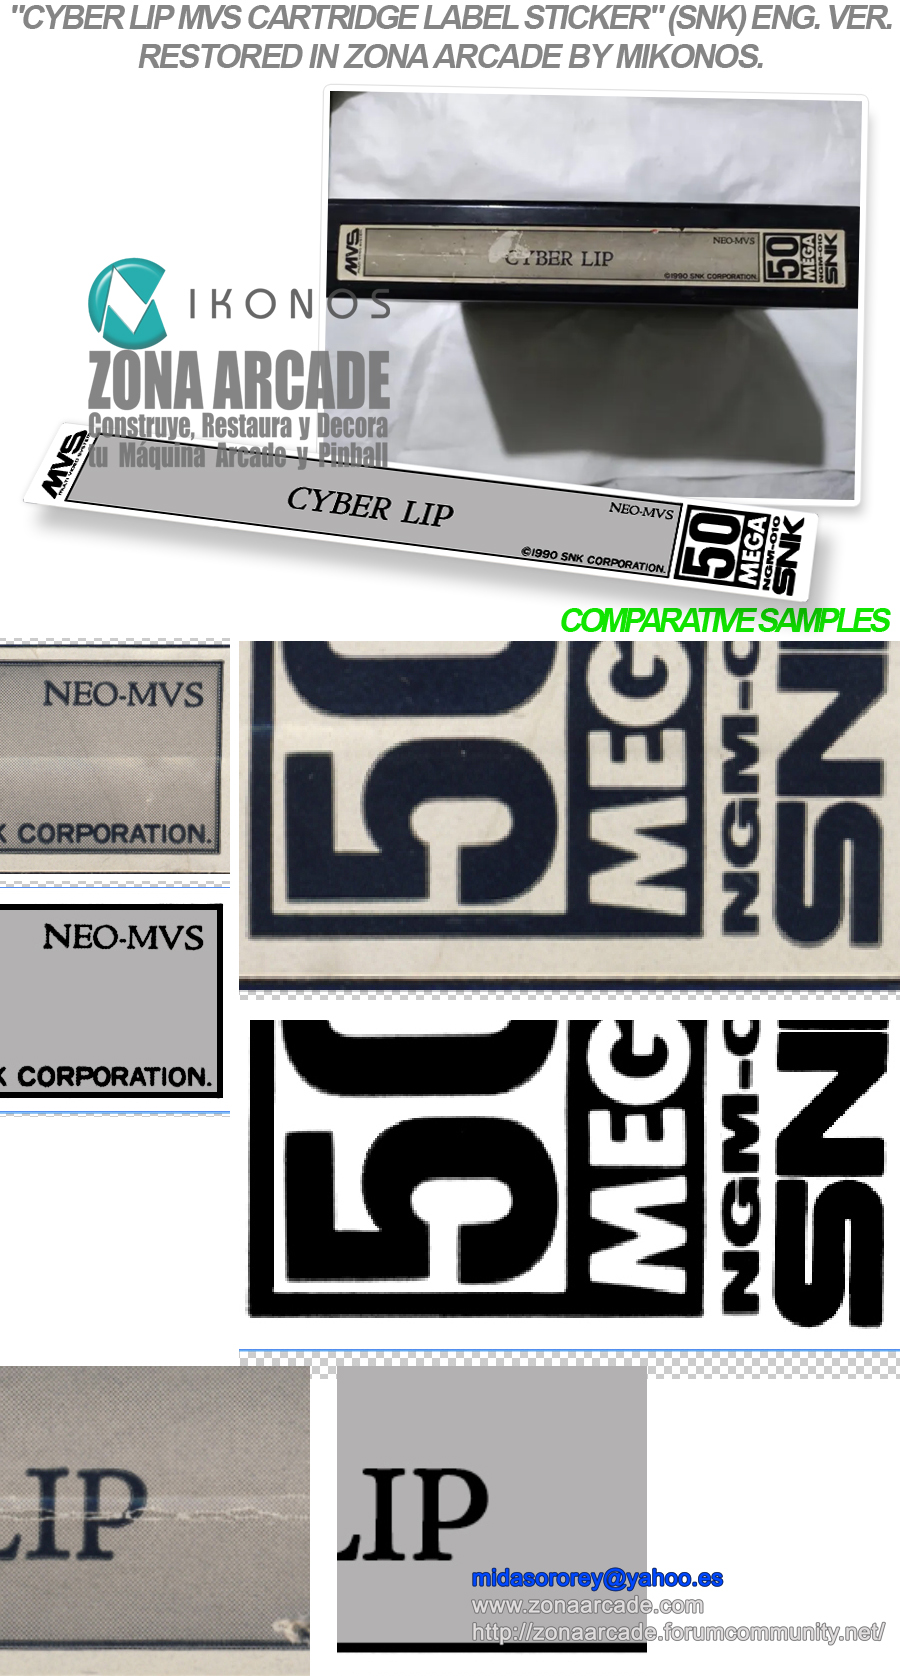 Cyber-Lip-MVS-Cartridge-Label-Sticker-Restored-Mikonos1